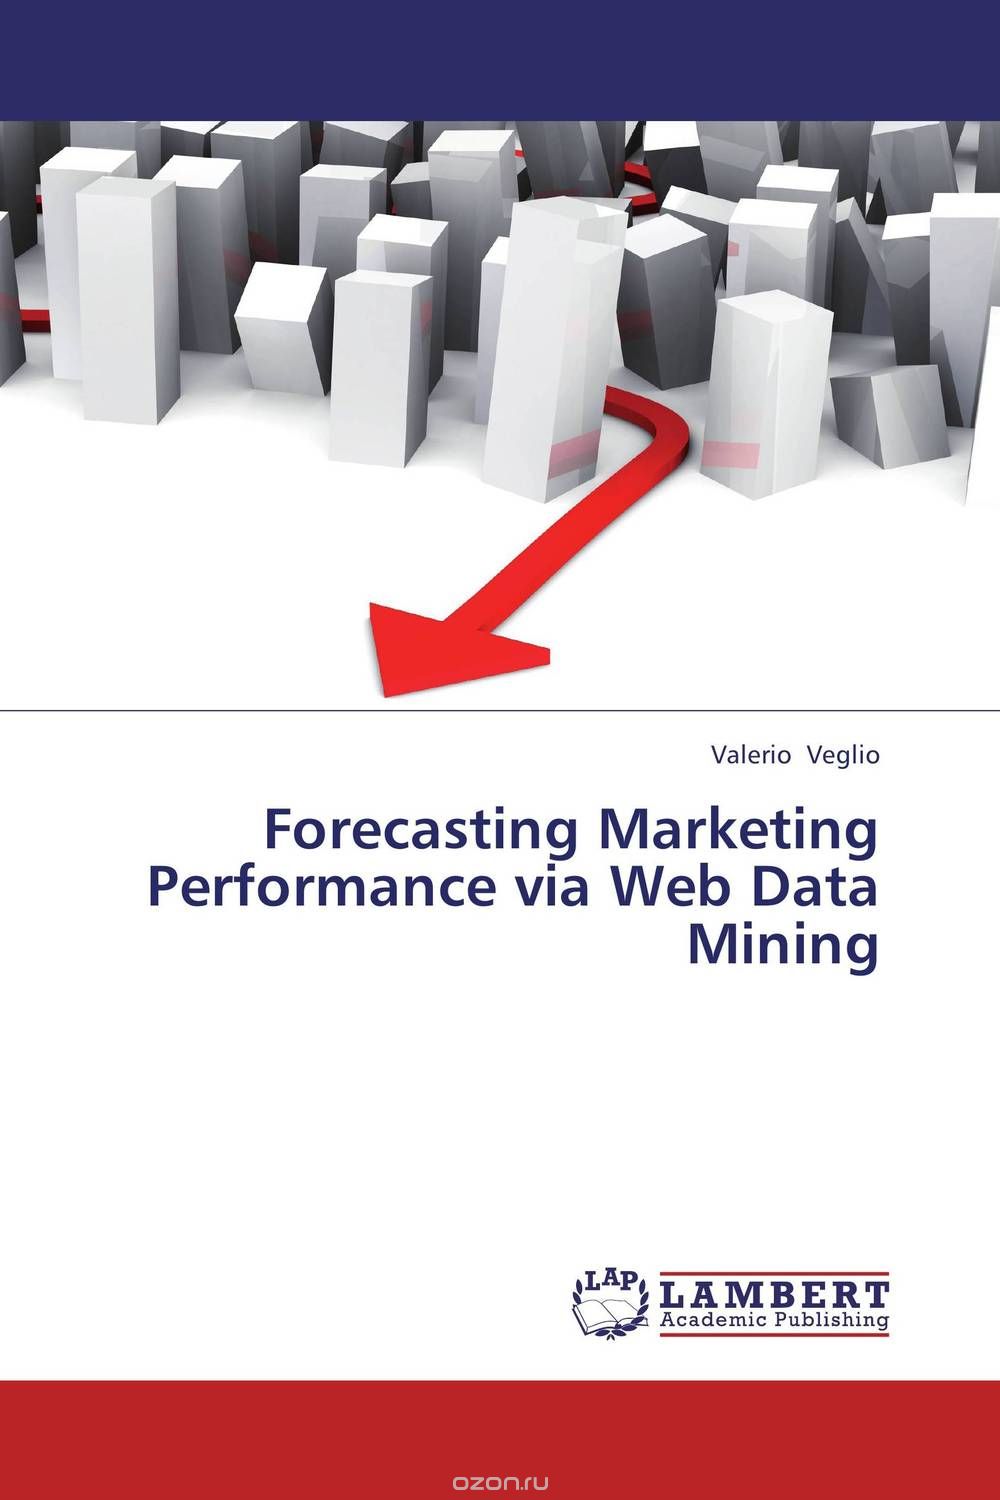 Скачать книгу "Forecasting Marketing Performance via Web Data Mining"